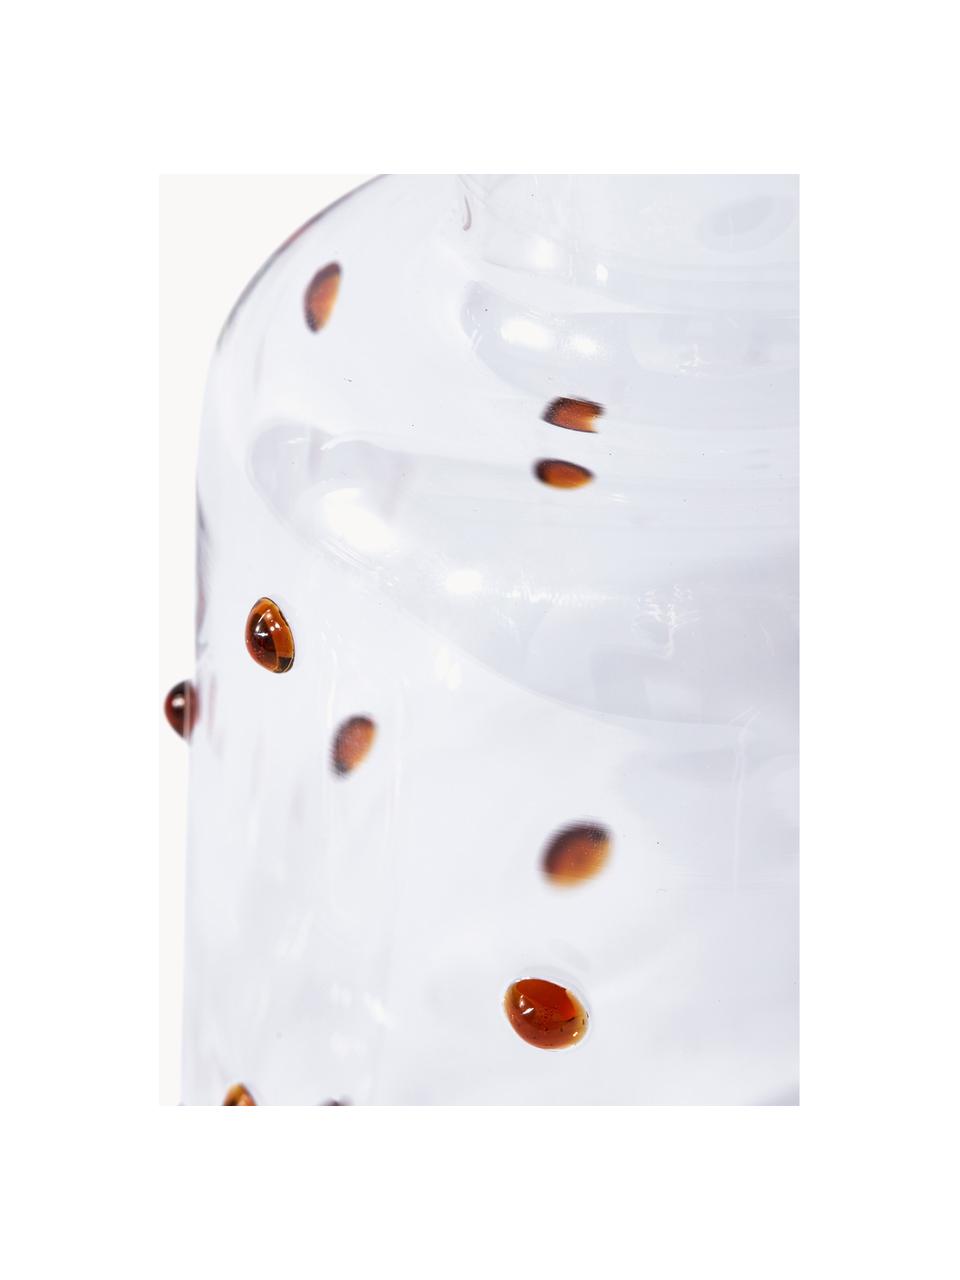 Mundgeblasene Karaffe Nob aus Borosilikatglas, 2 L, Borosilikatglas, mundgeblasen, Transparent, Braun, 2 L